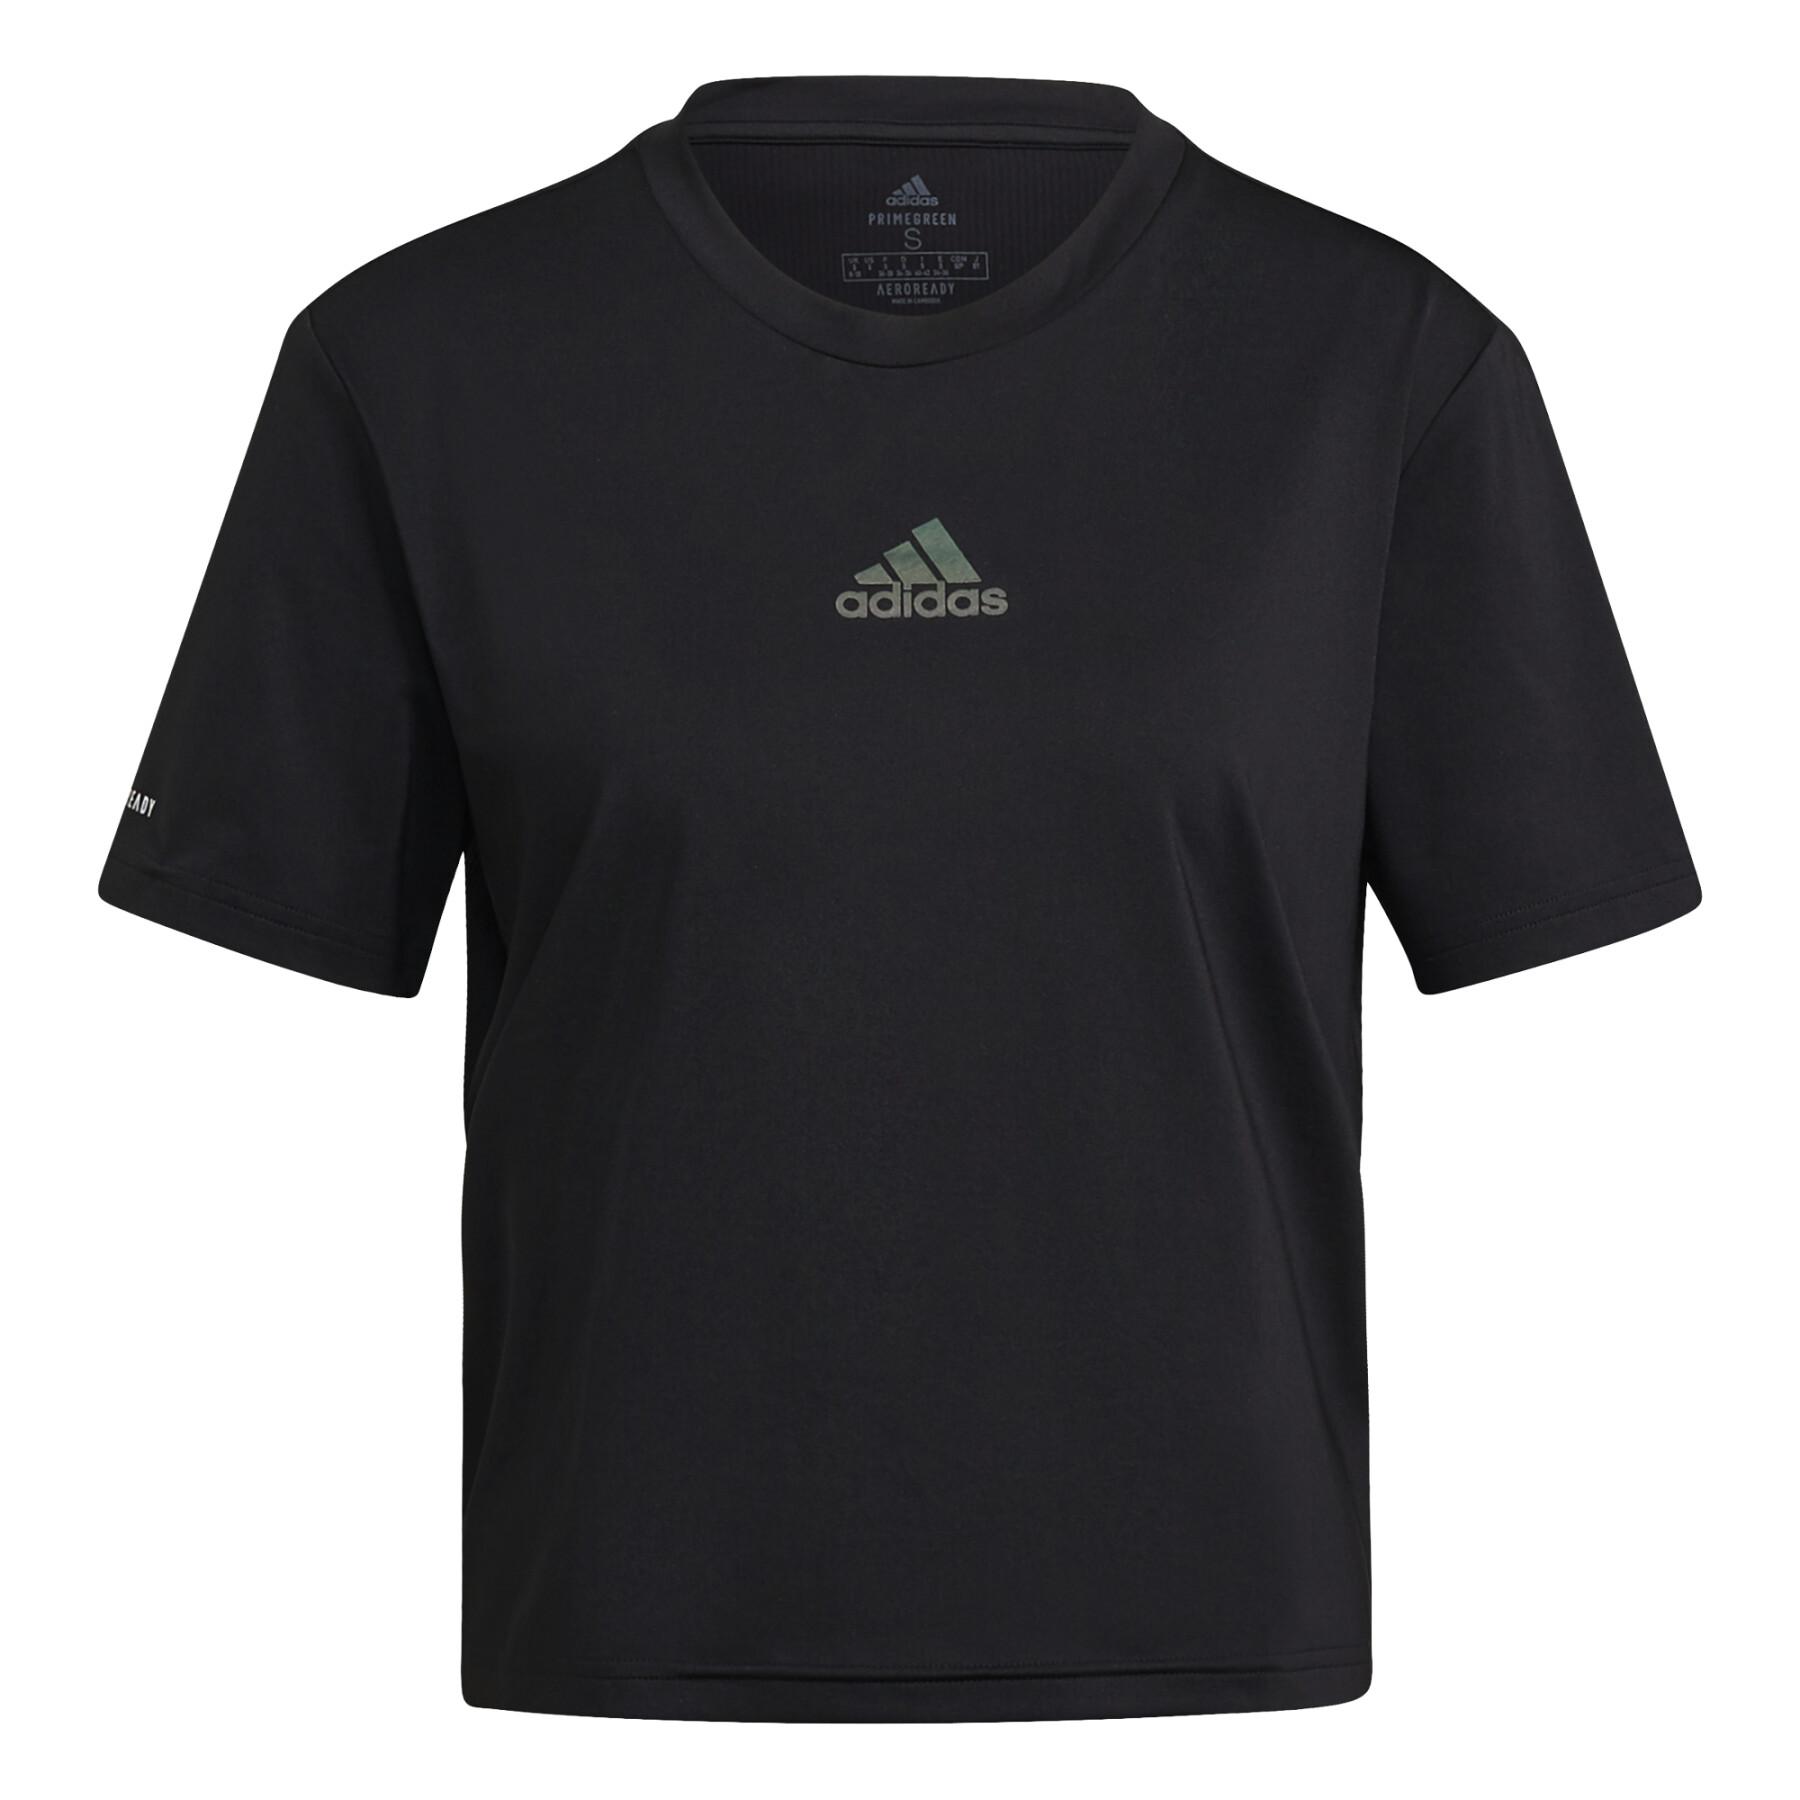 Dames-T-shirt adidas AEROREADY You for You Sport